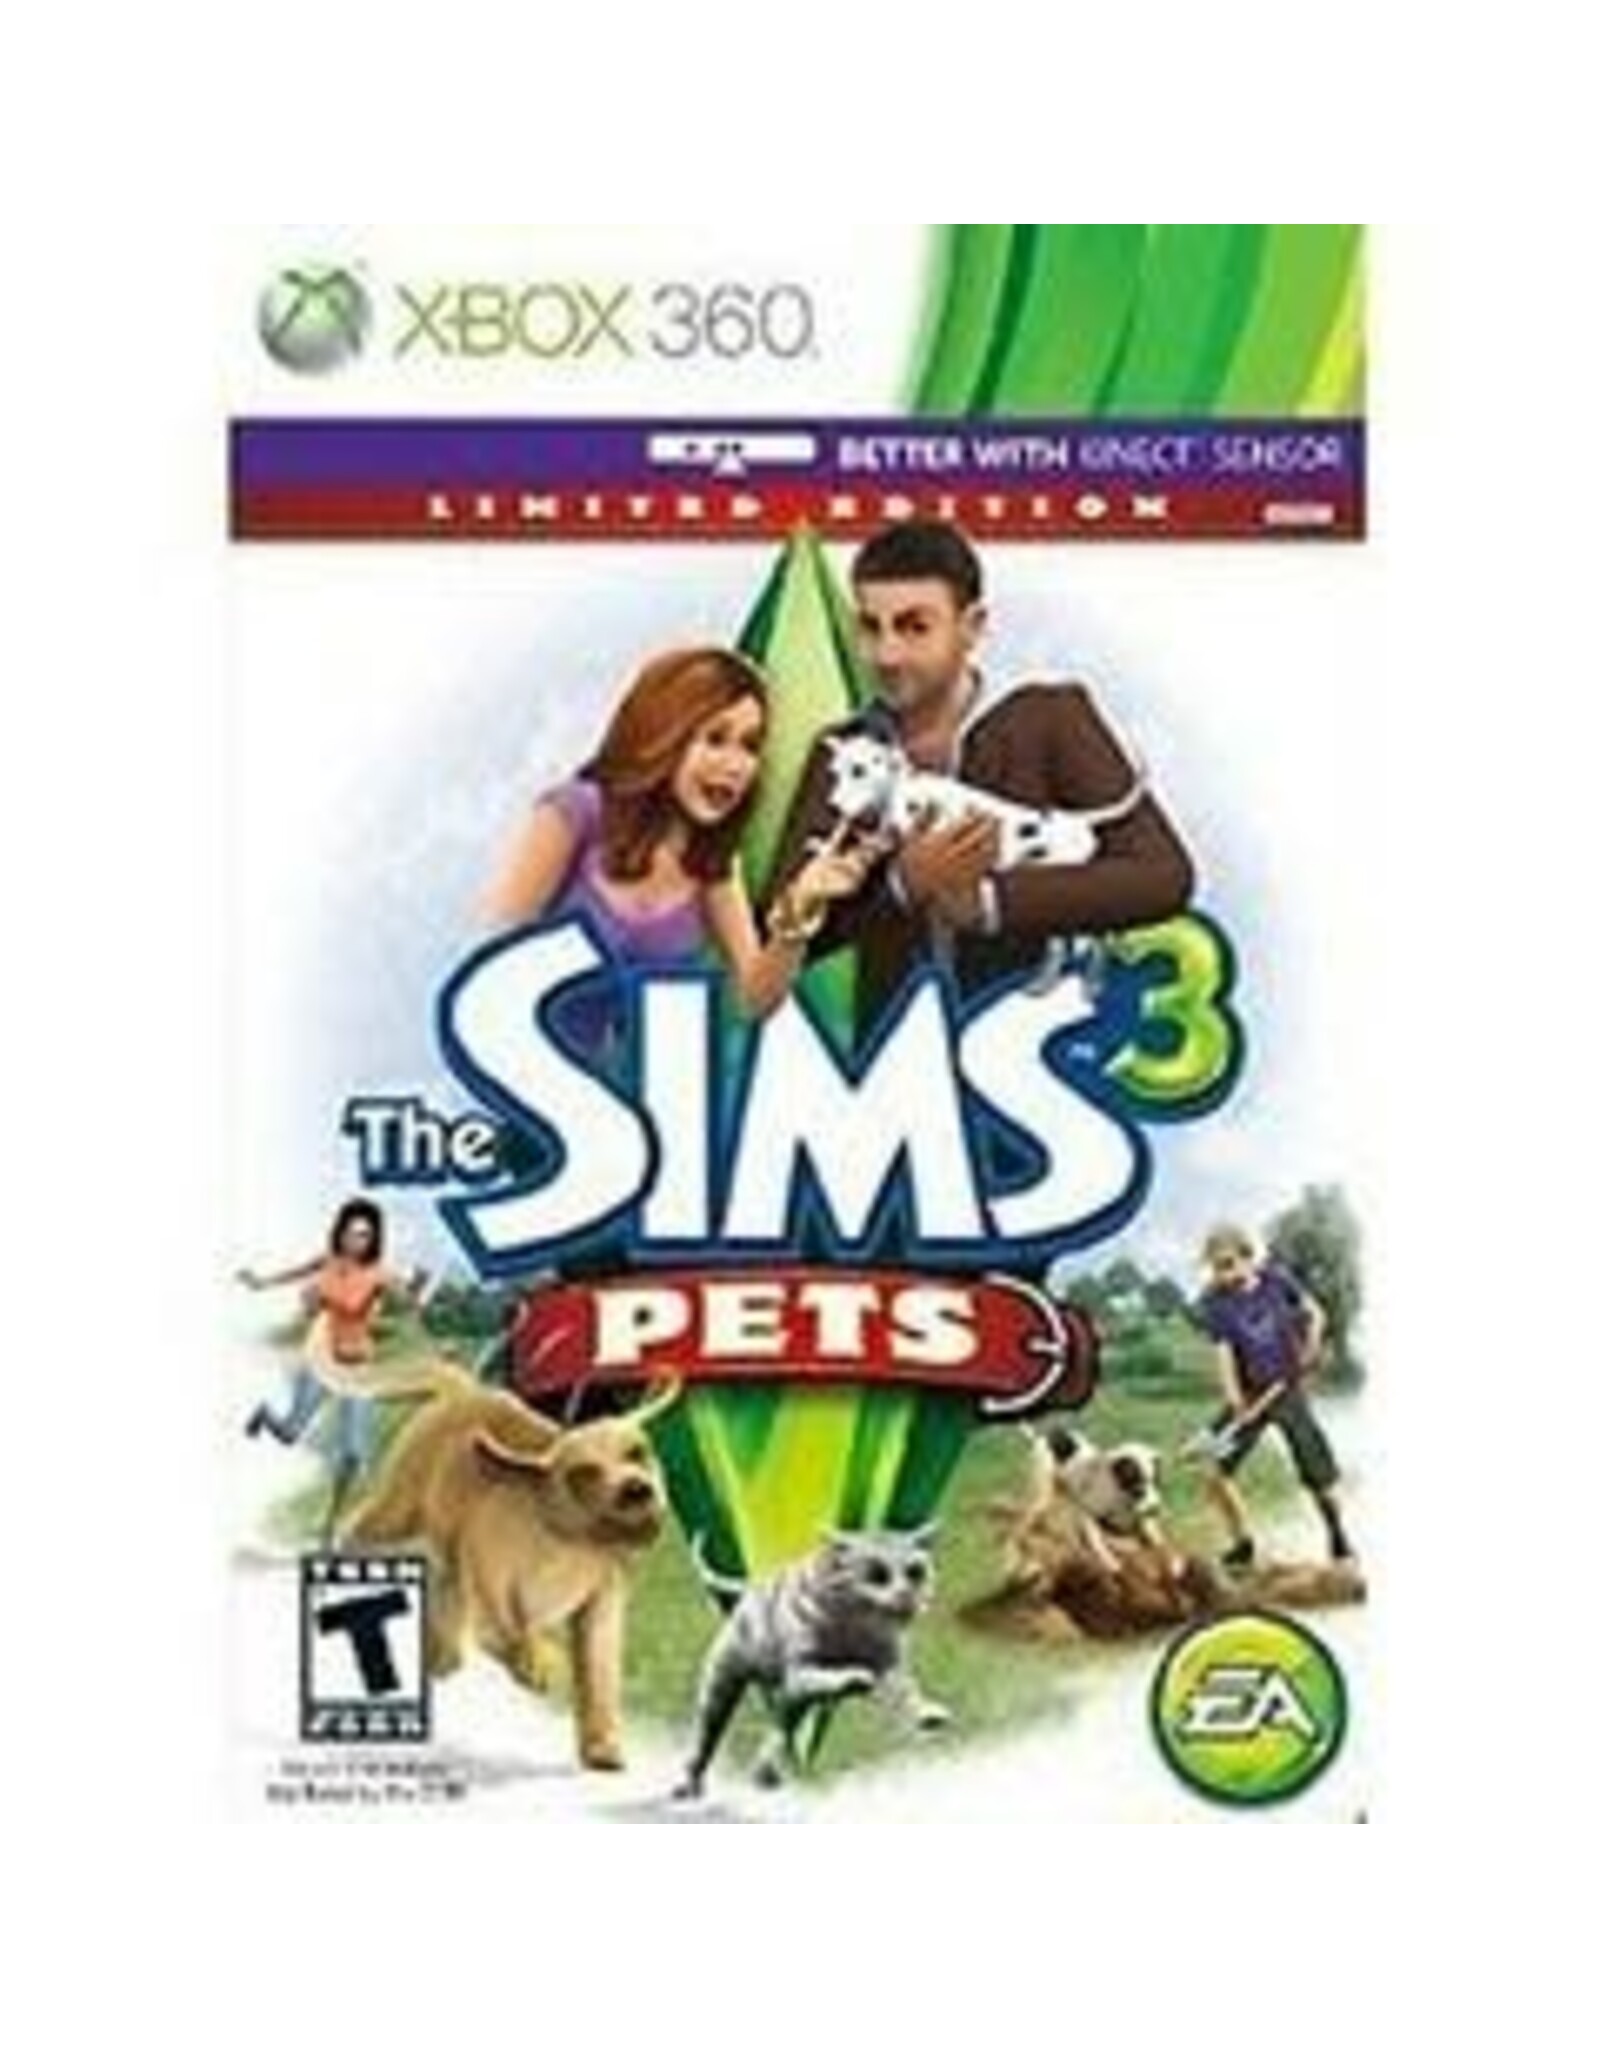 Xbox 360 Sims 3, The: Pets Limited Edition (CiB, No DLC)